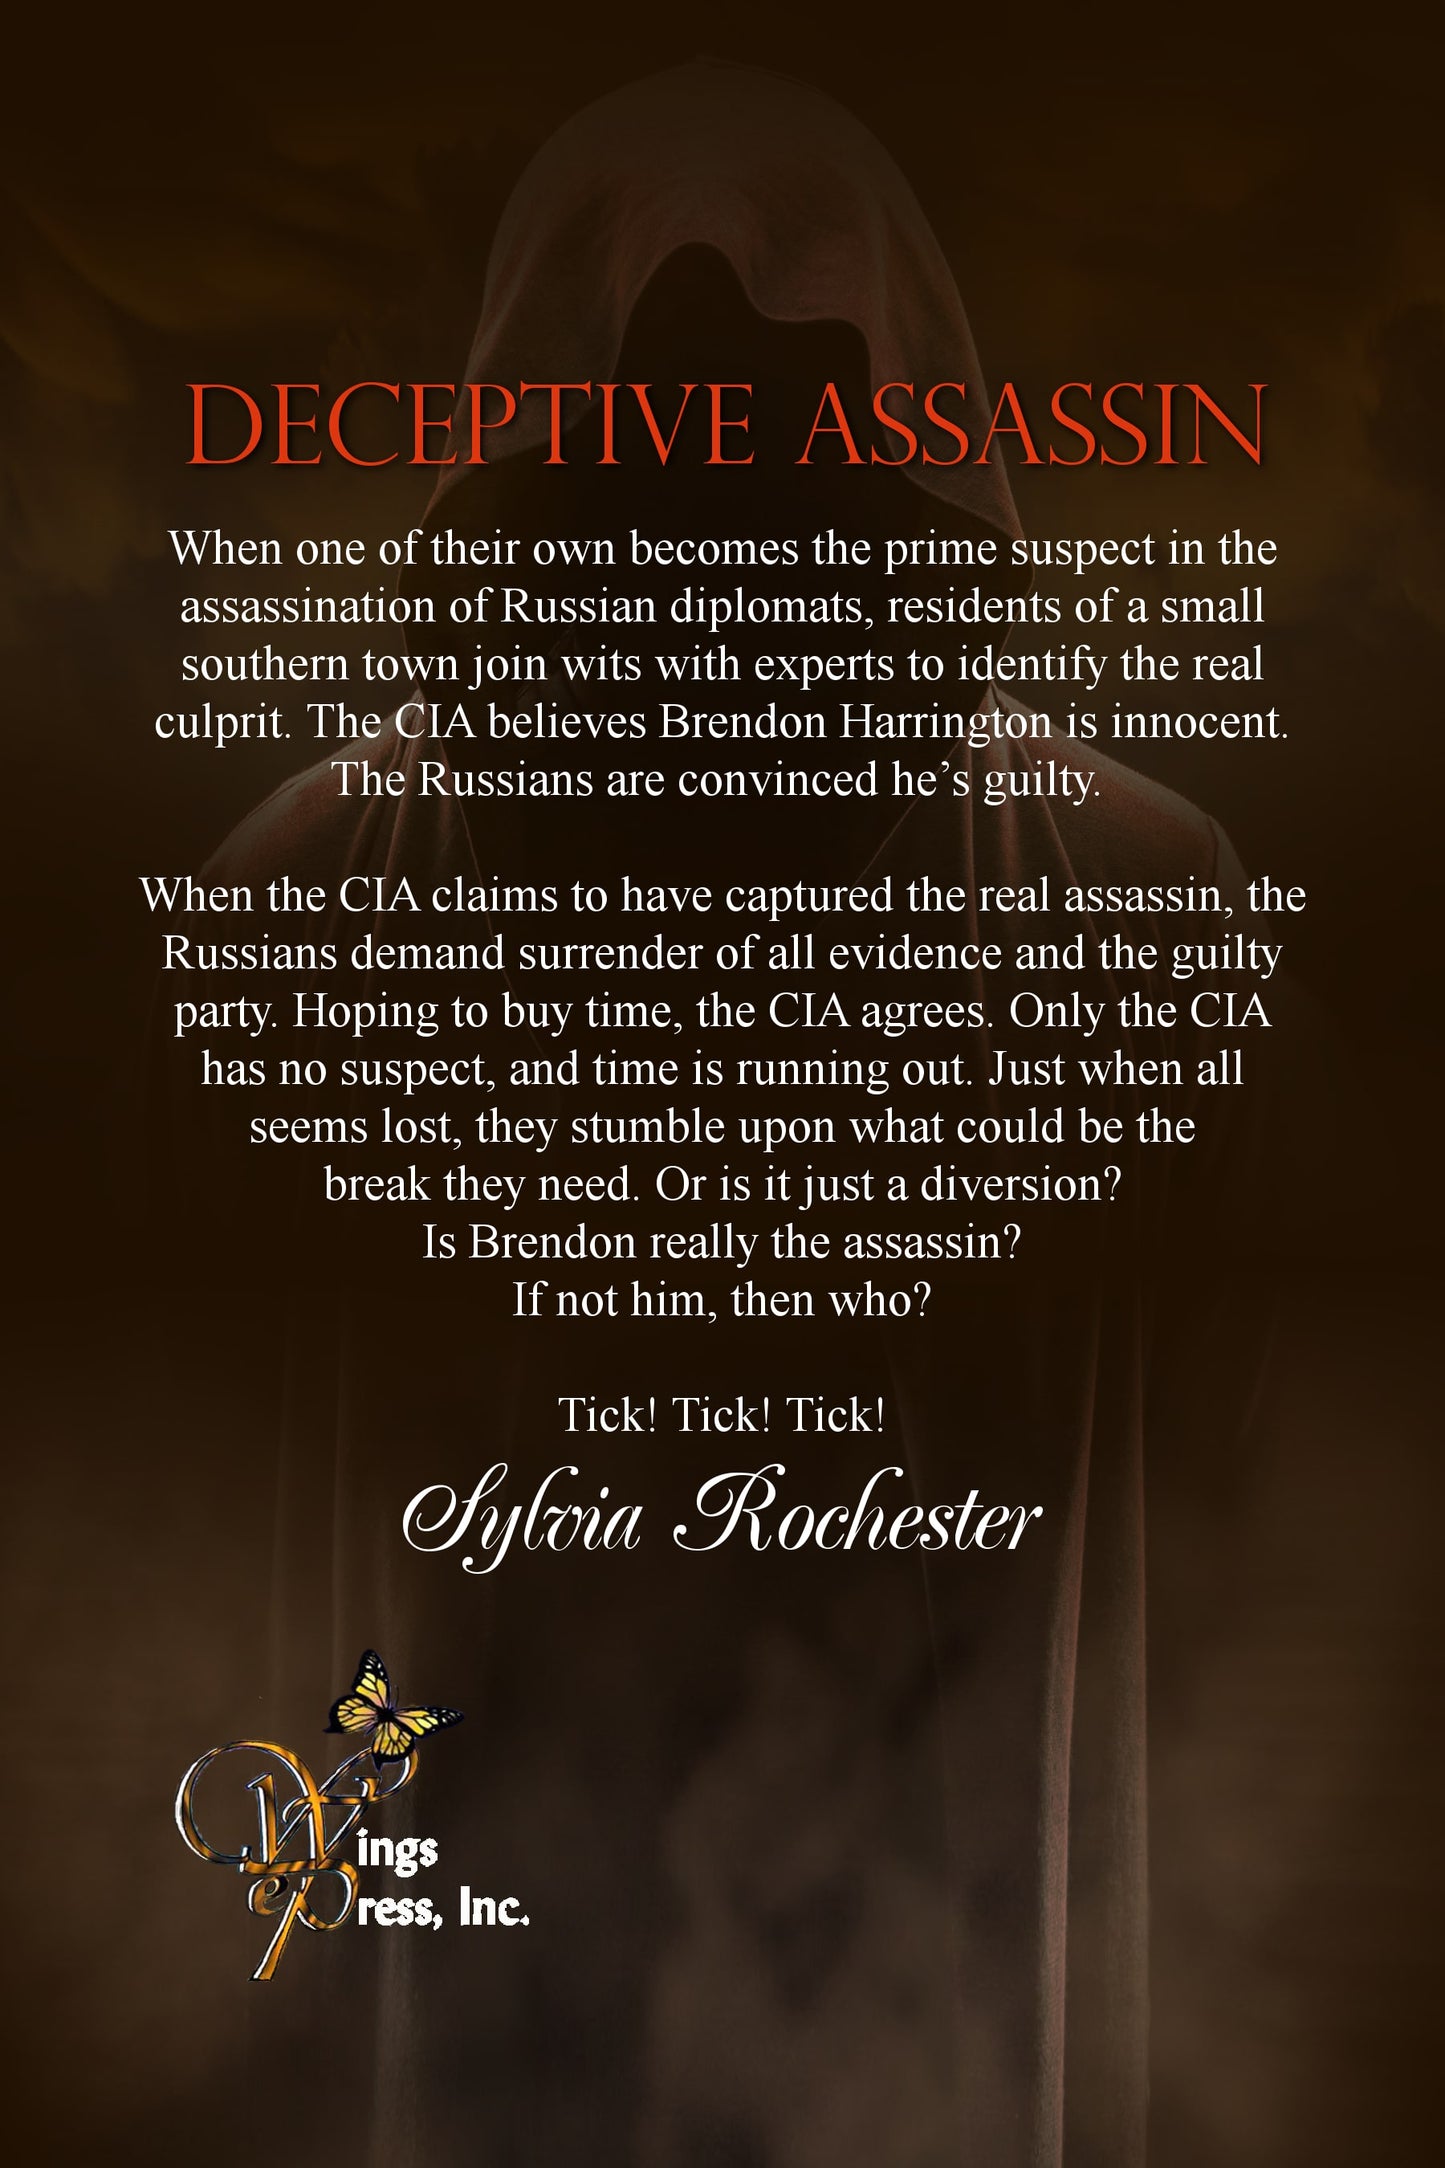 Deceptive Assassin